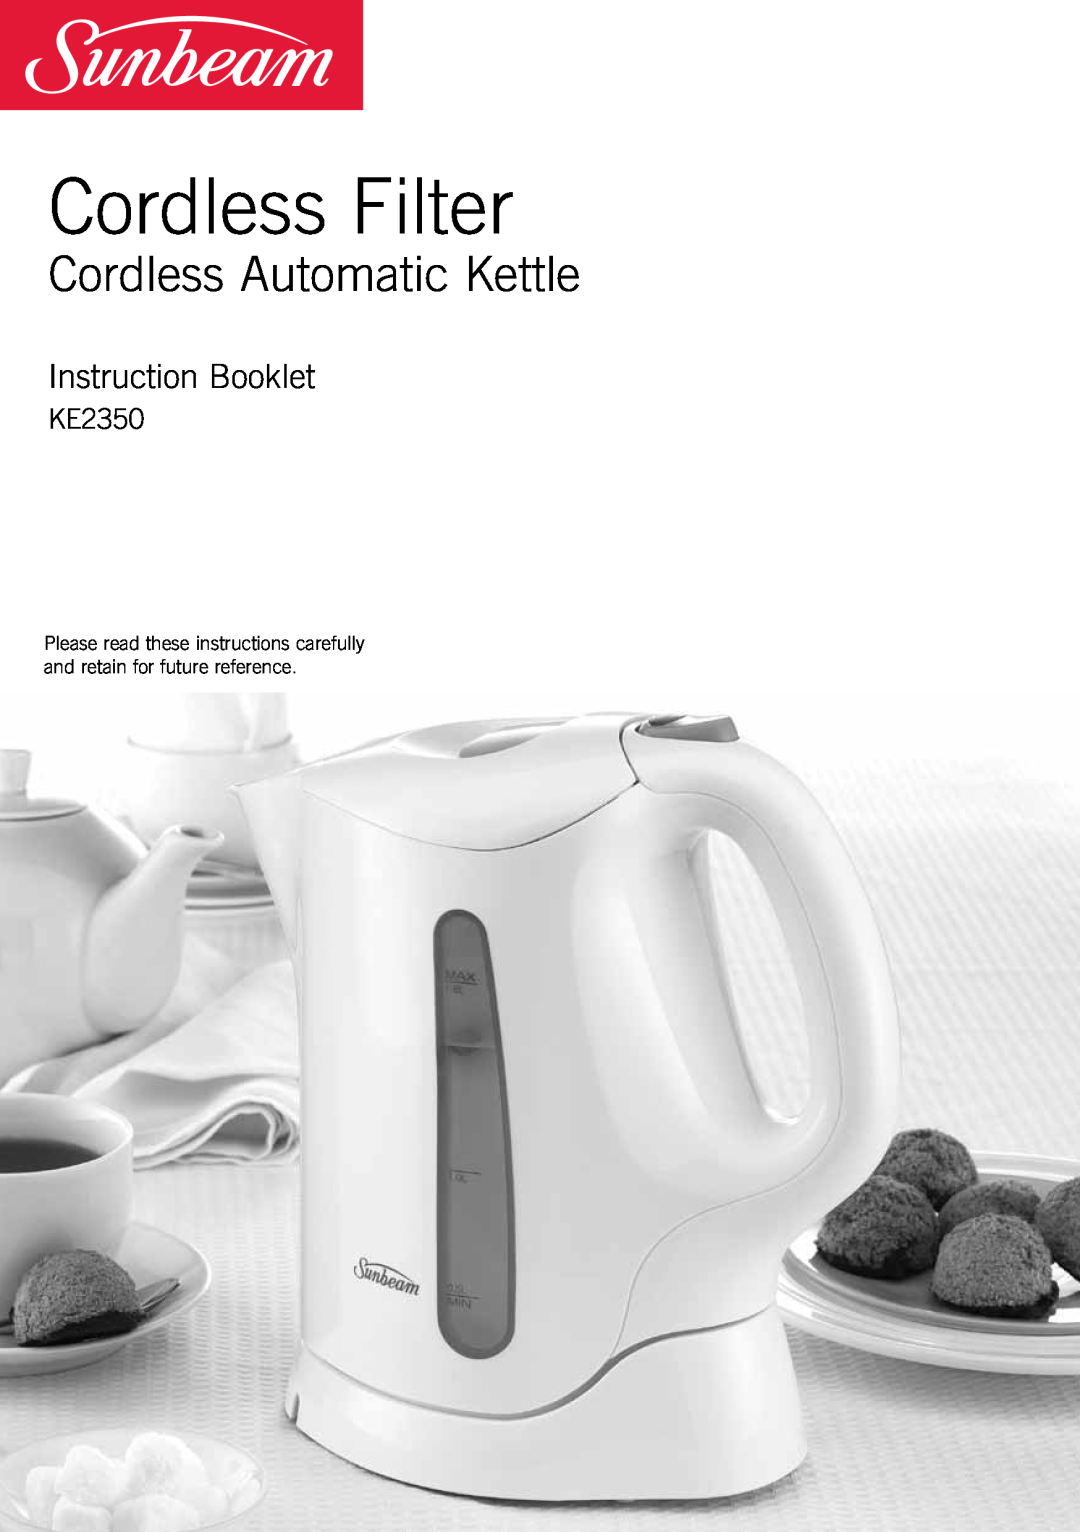 Sunbeam KE2350 manual Cordless Filter, Cordless Automatic Kettle, Instruction Booklet 